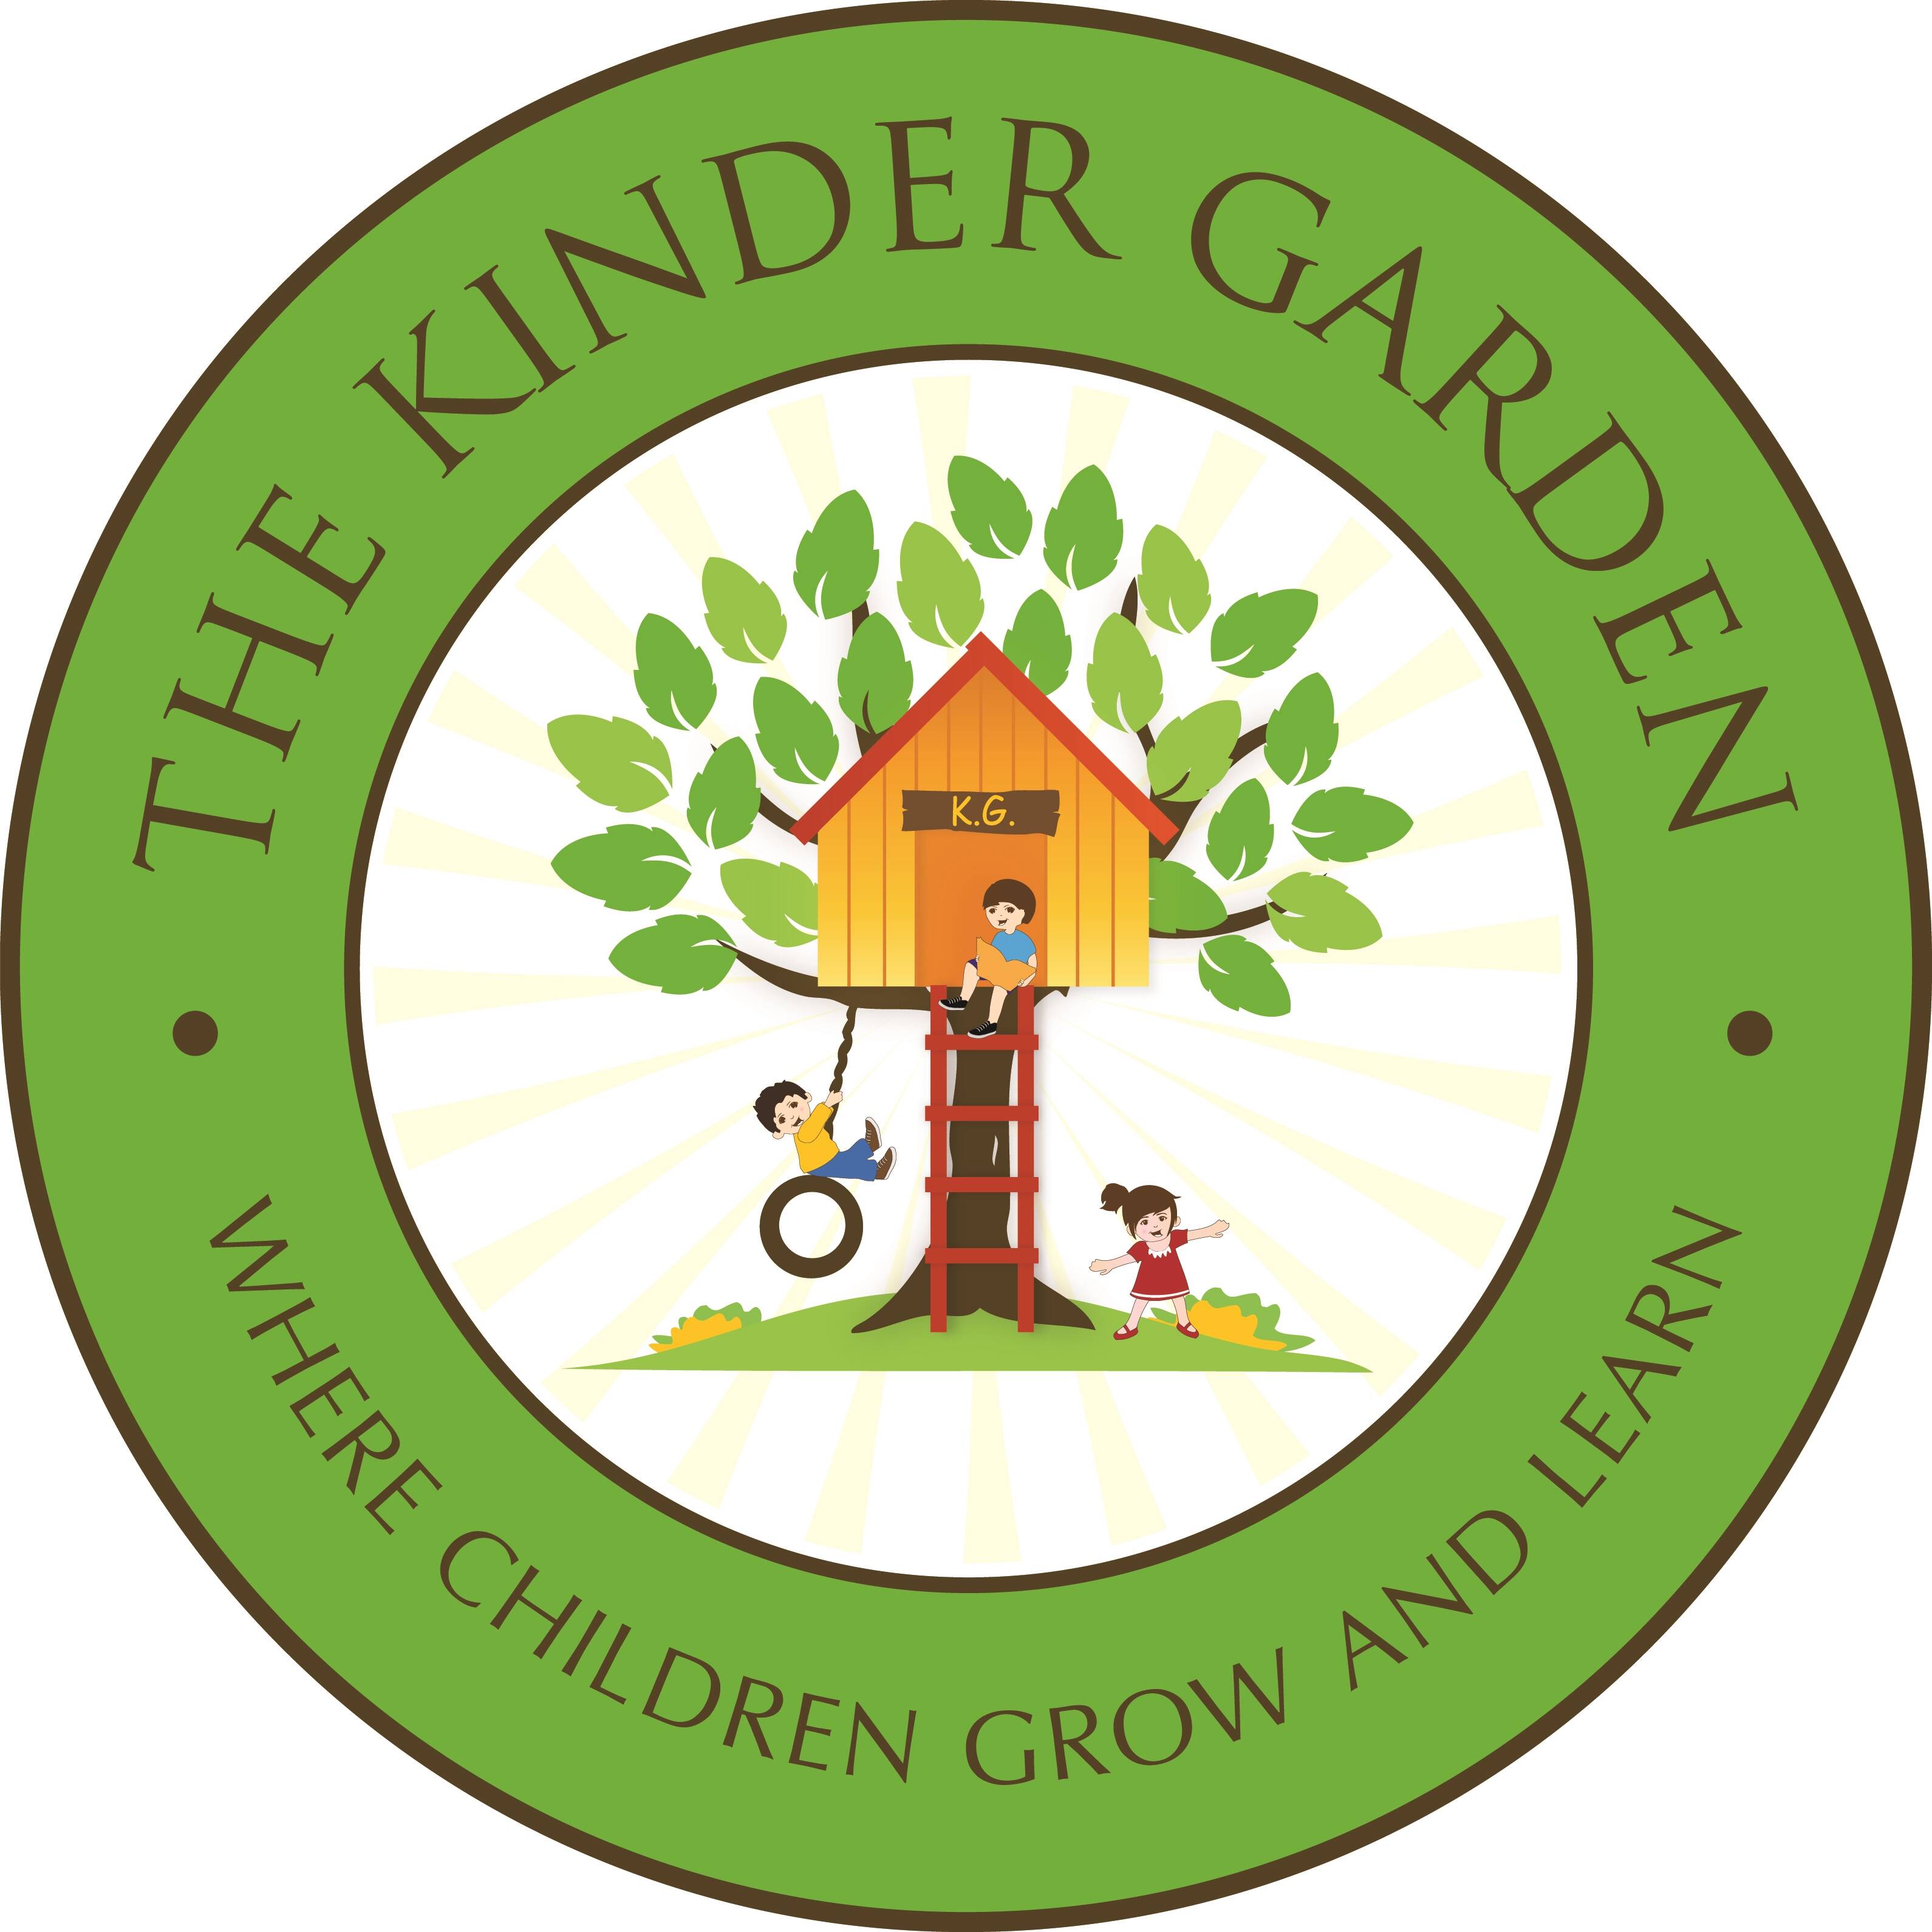 The Kinder Garden Engadine